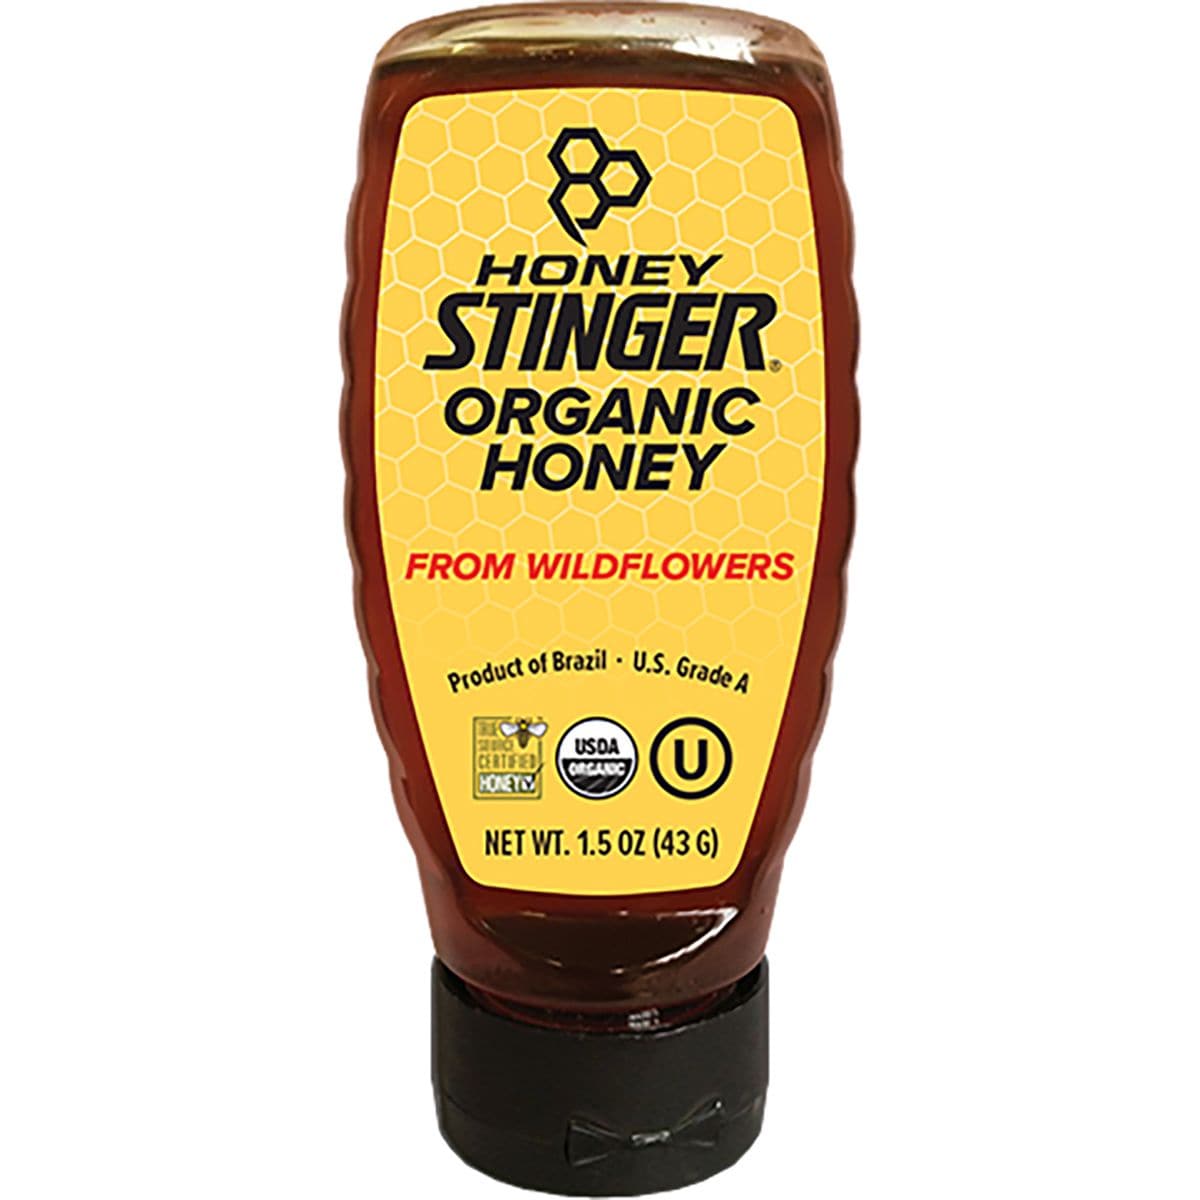 Honey Stinger Organic Honey